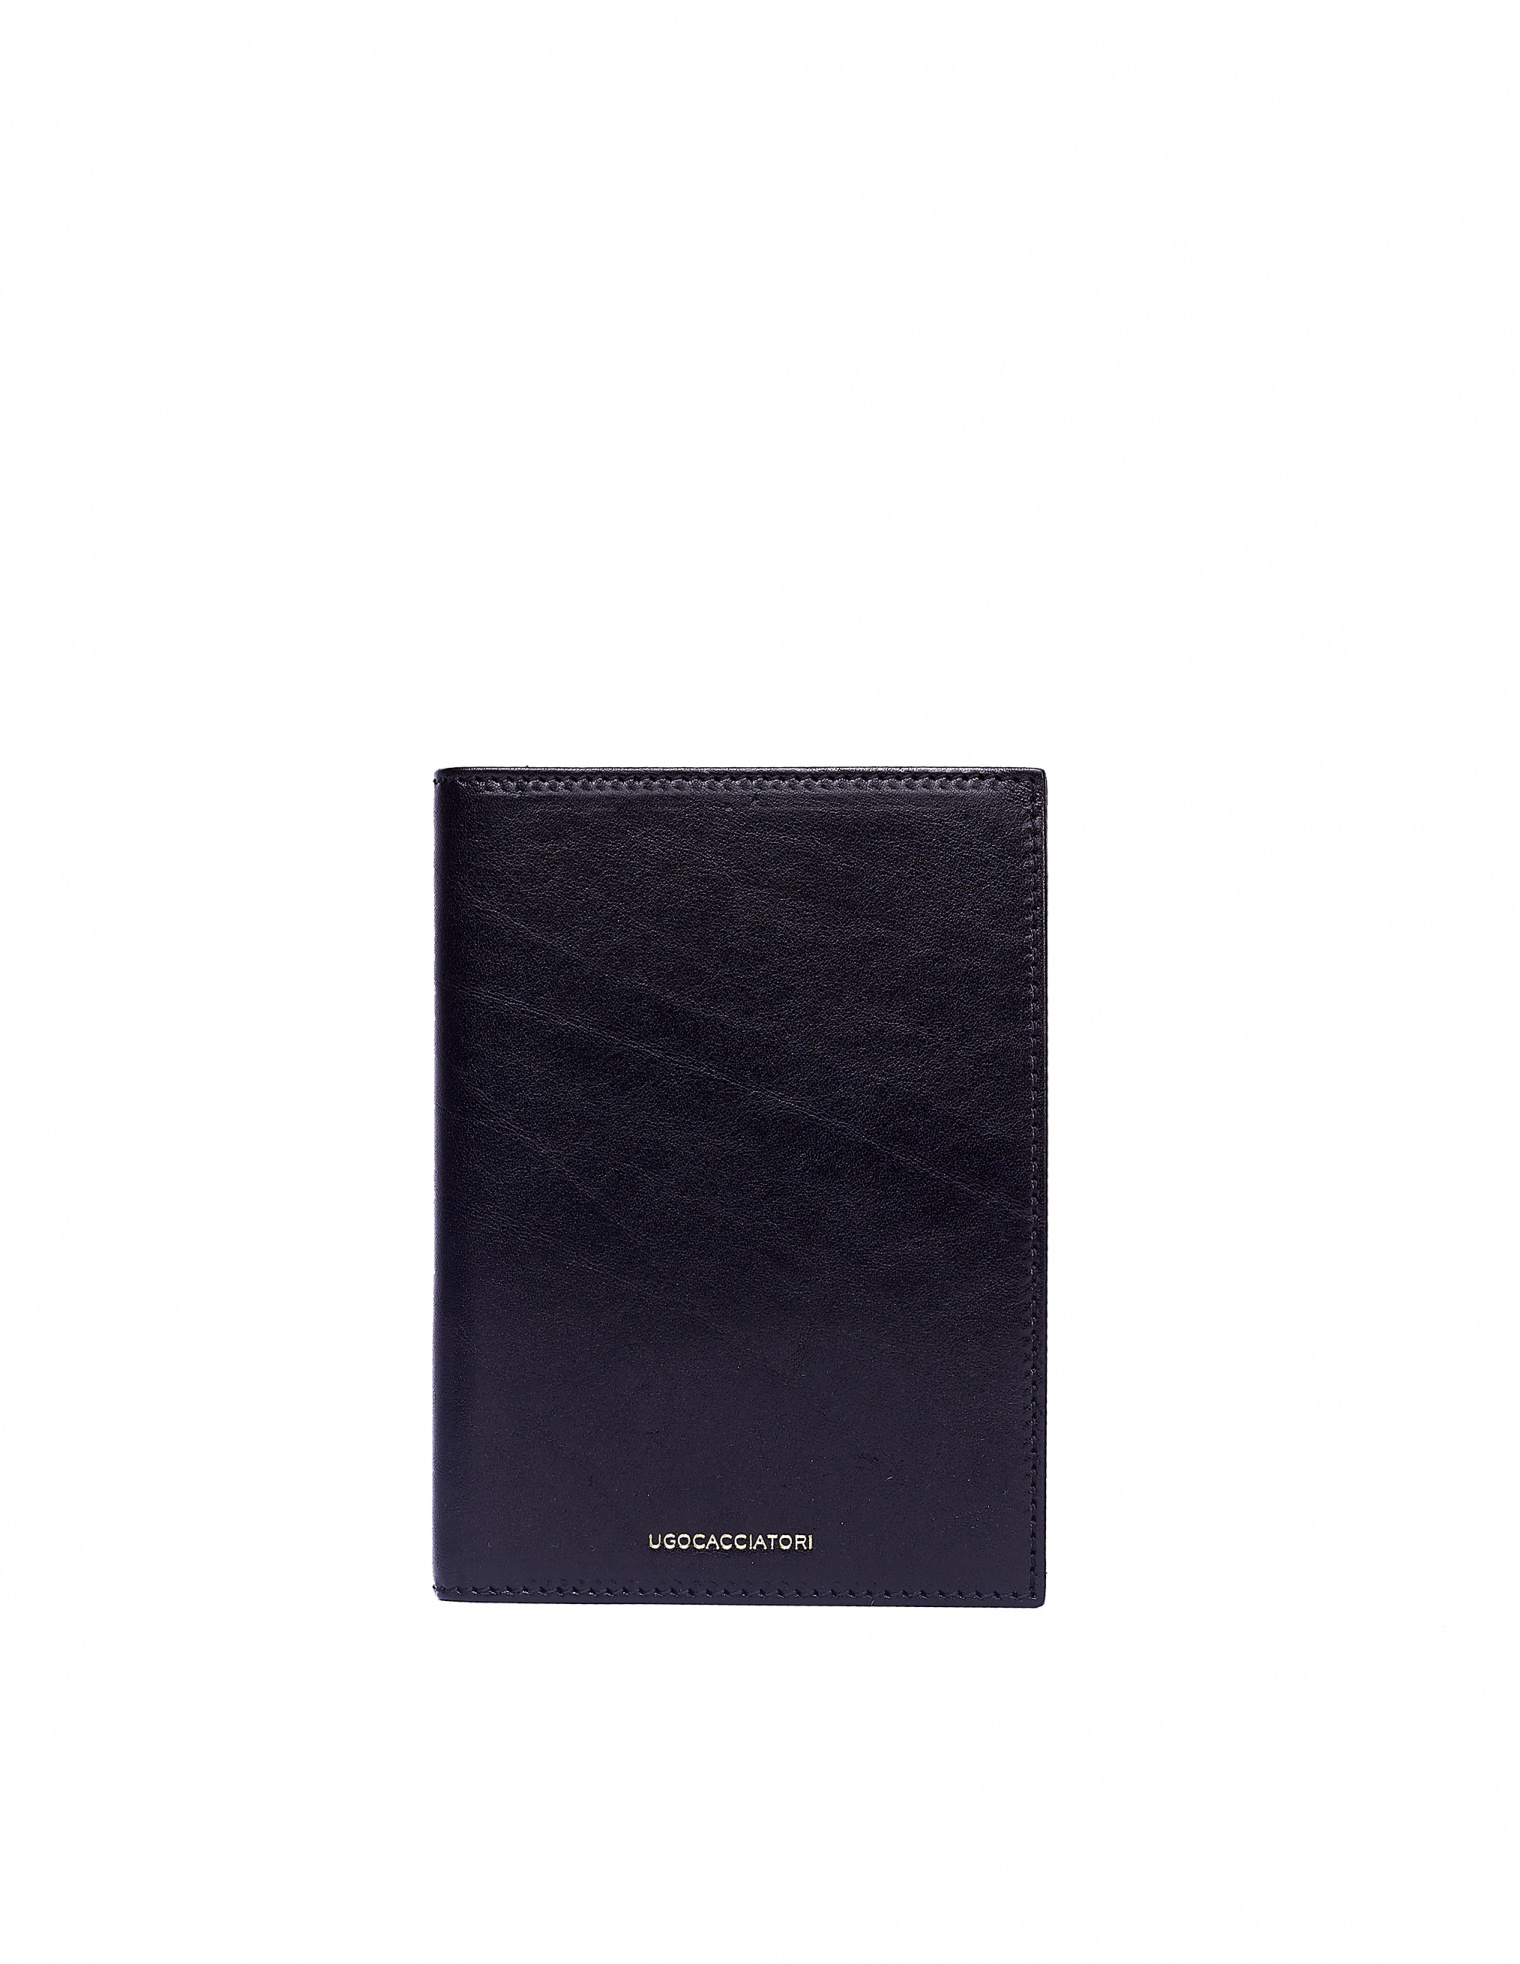 Ugo Cacciatori Black Leather Passport Wallet